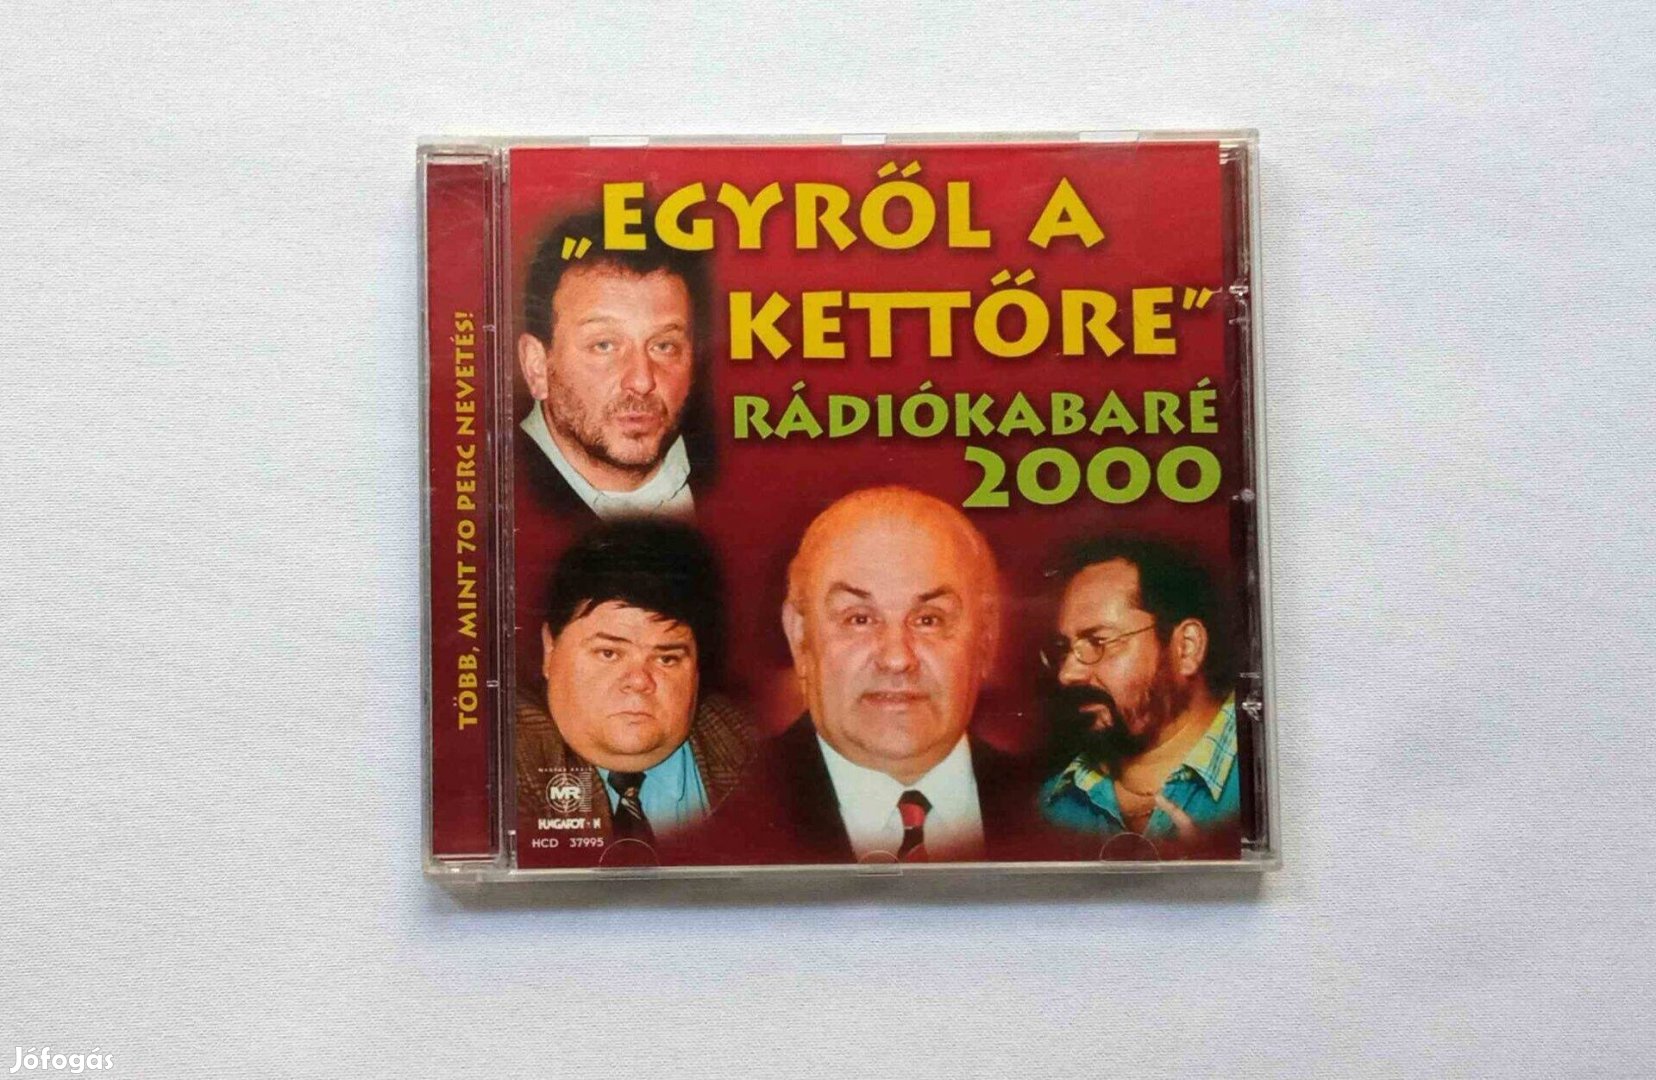 Hungaroton Audio CD "Egyről a kettőre" rádiókabaré 2000 * 1400 Ft